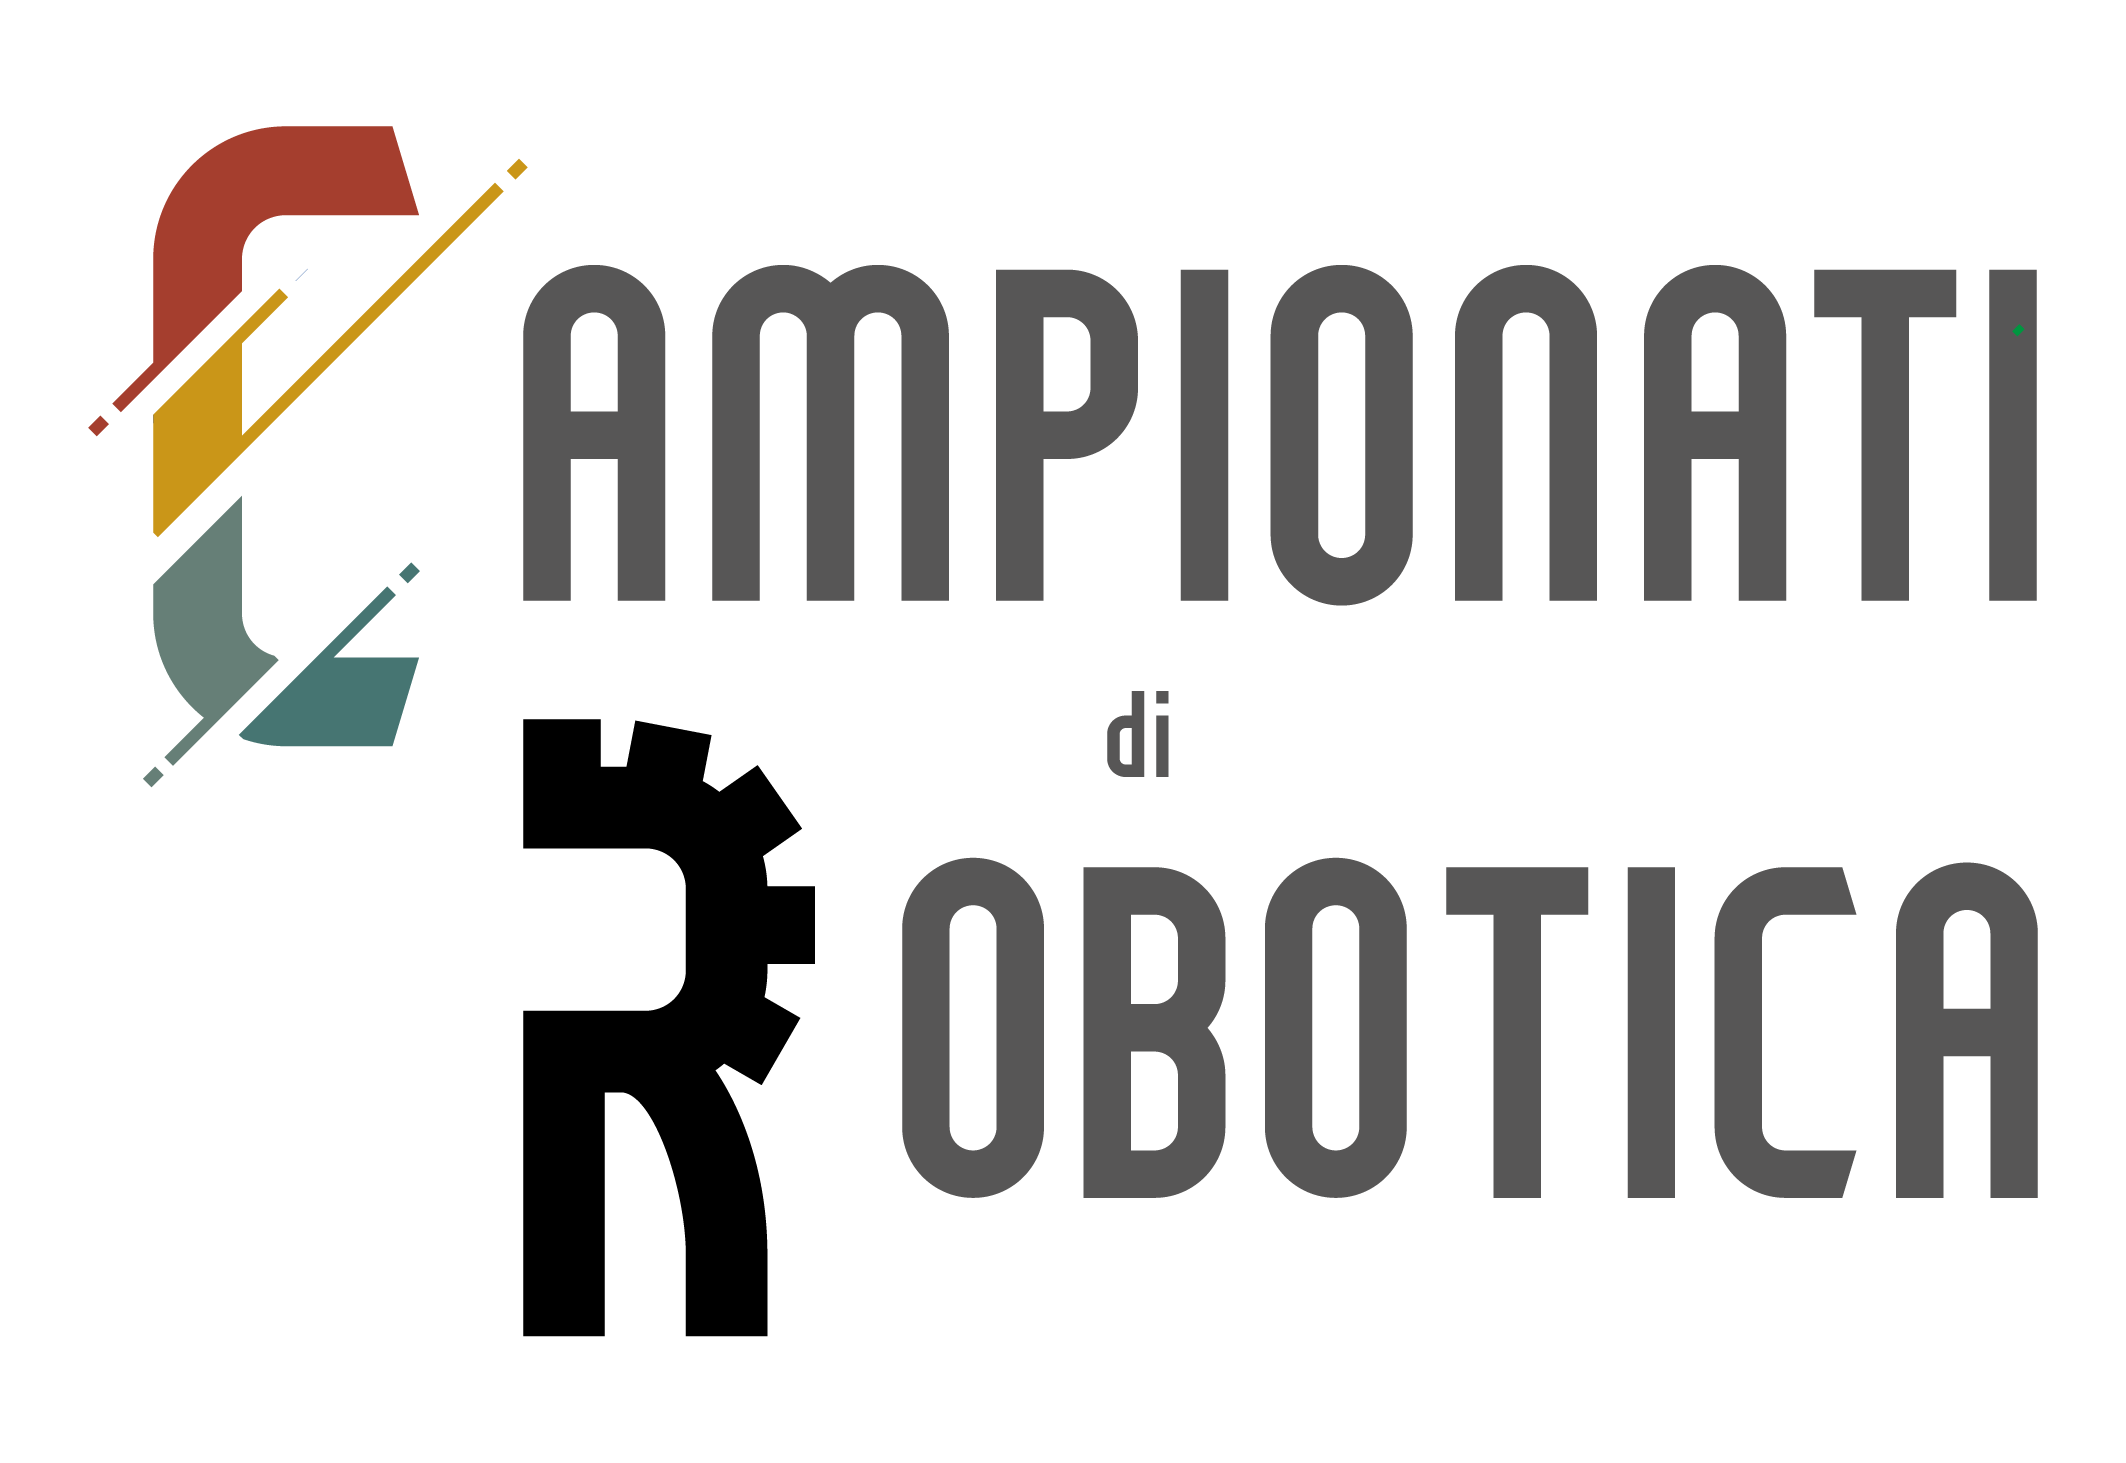 CampionatiRobotica logo